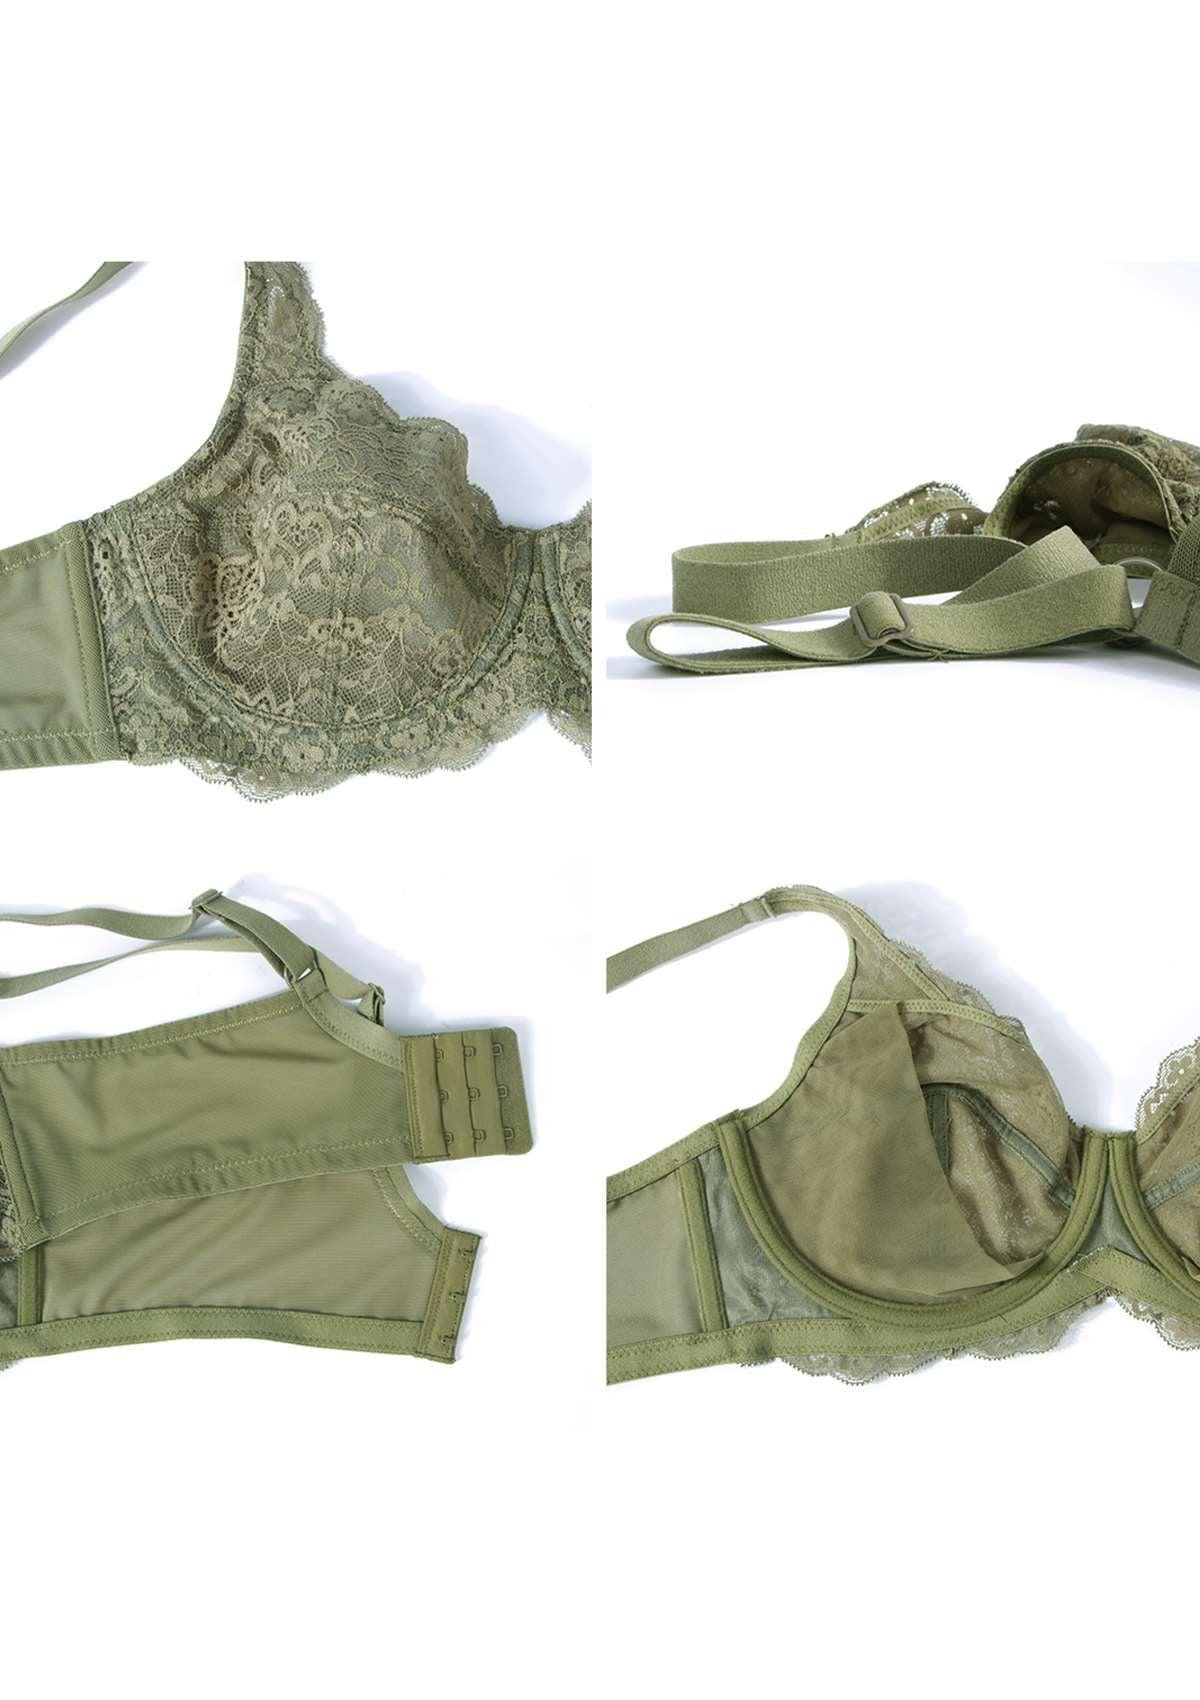 HSIA All-Over Floral Lace Unlined Bra: Minimizer Bra For Heavy Breasts - Dark Green / 34 / DD/E